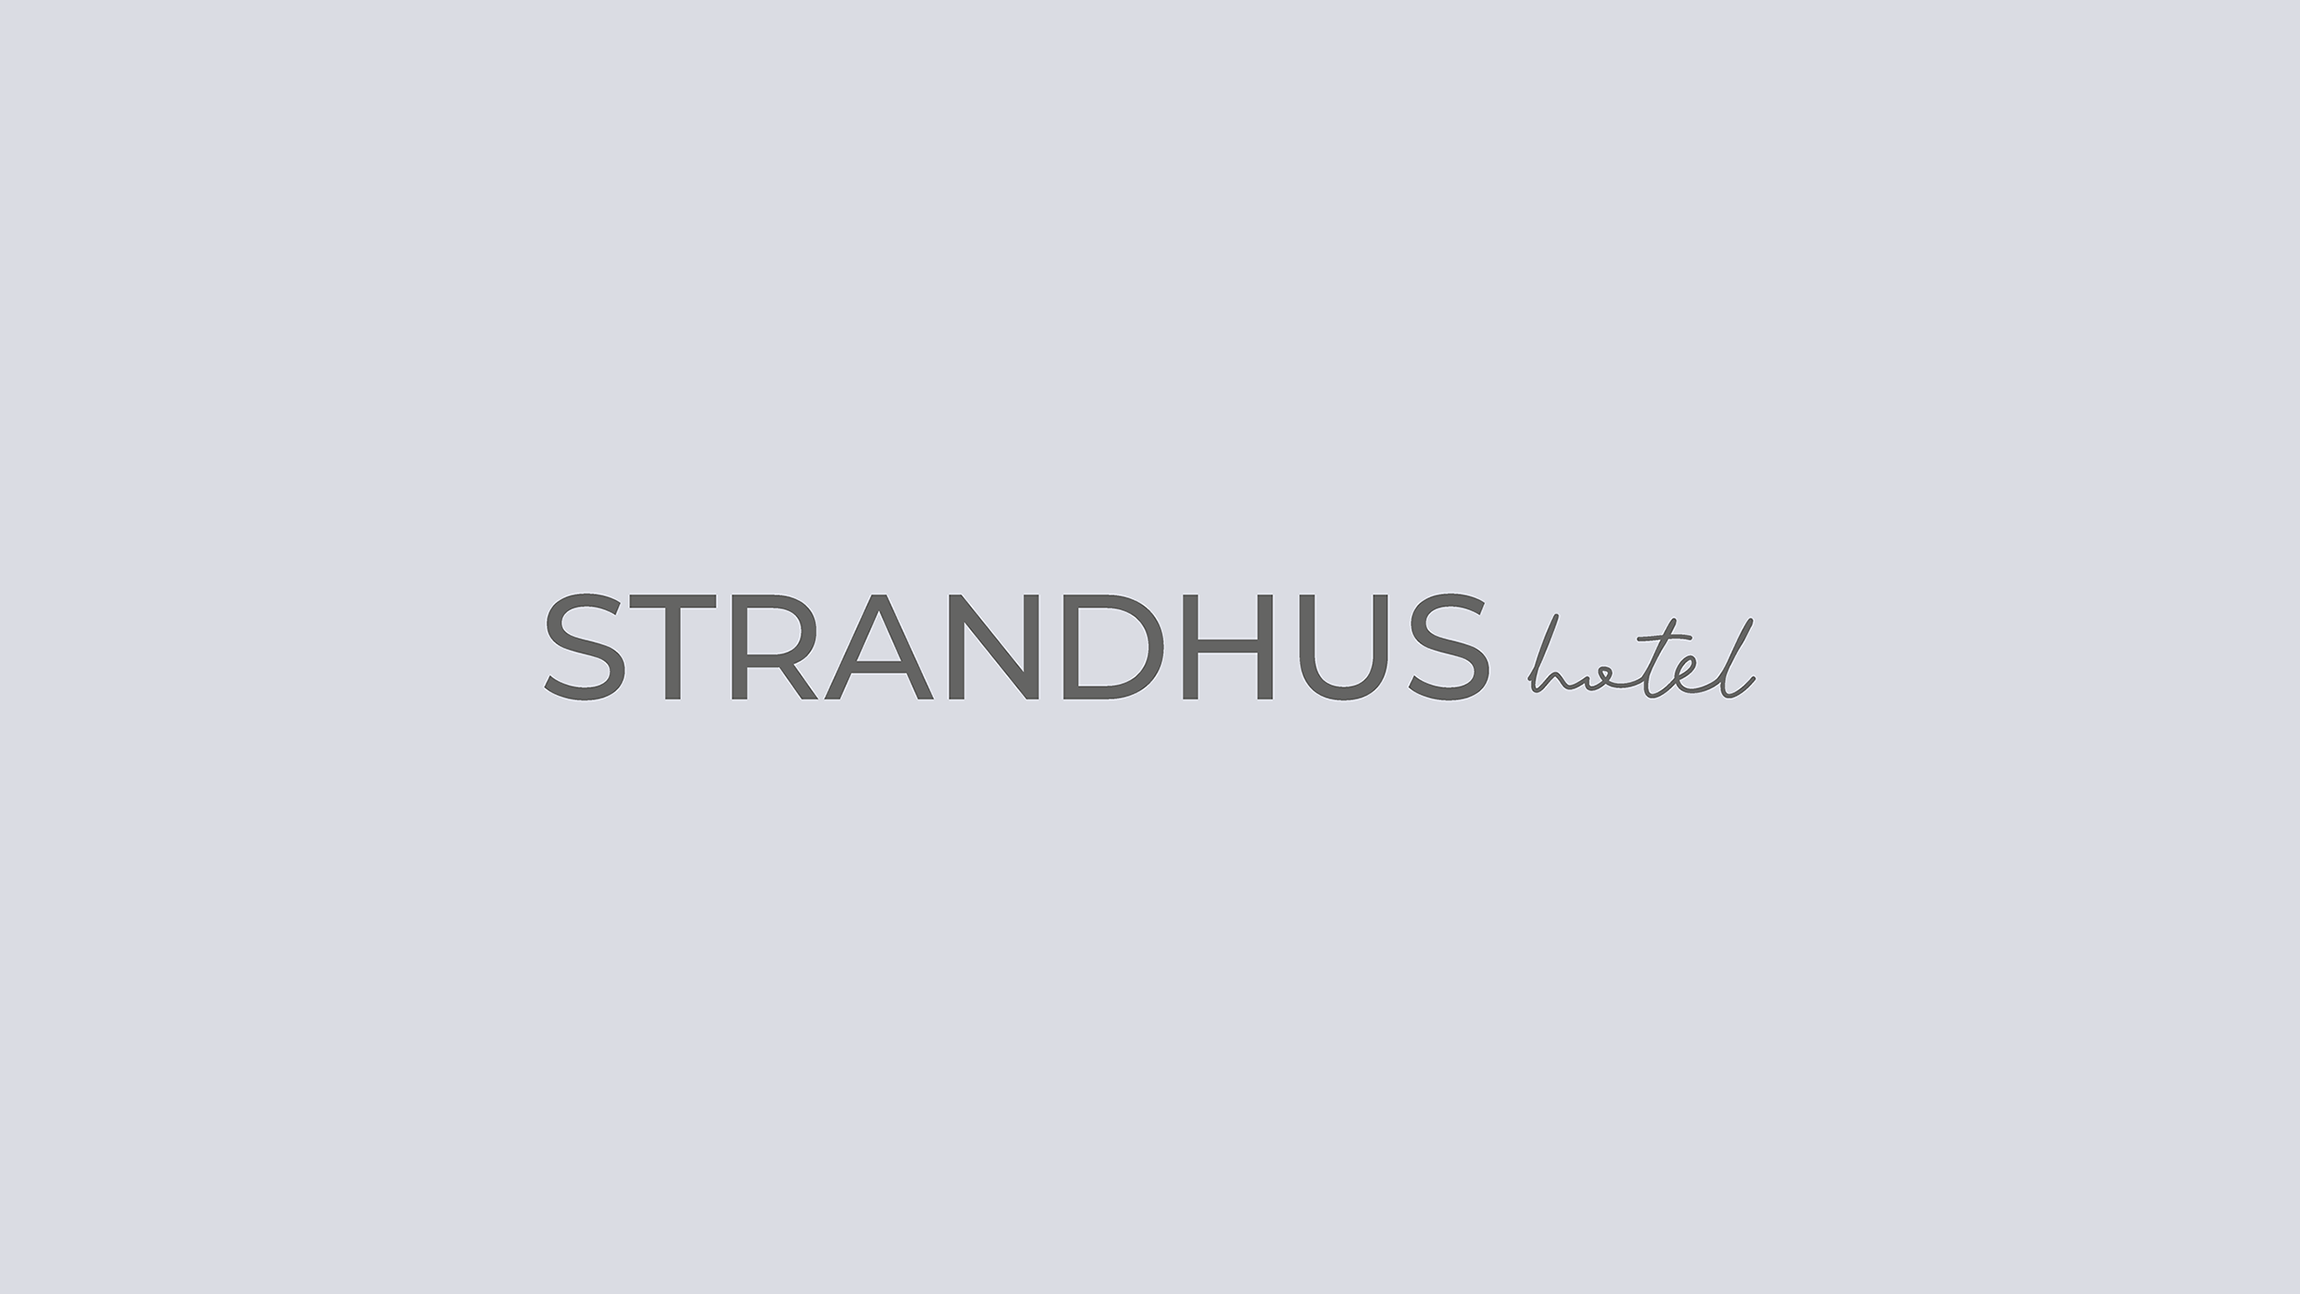 Strandhus Hotel Cuxhaven Webdesign by Art+Code Studio